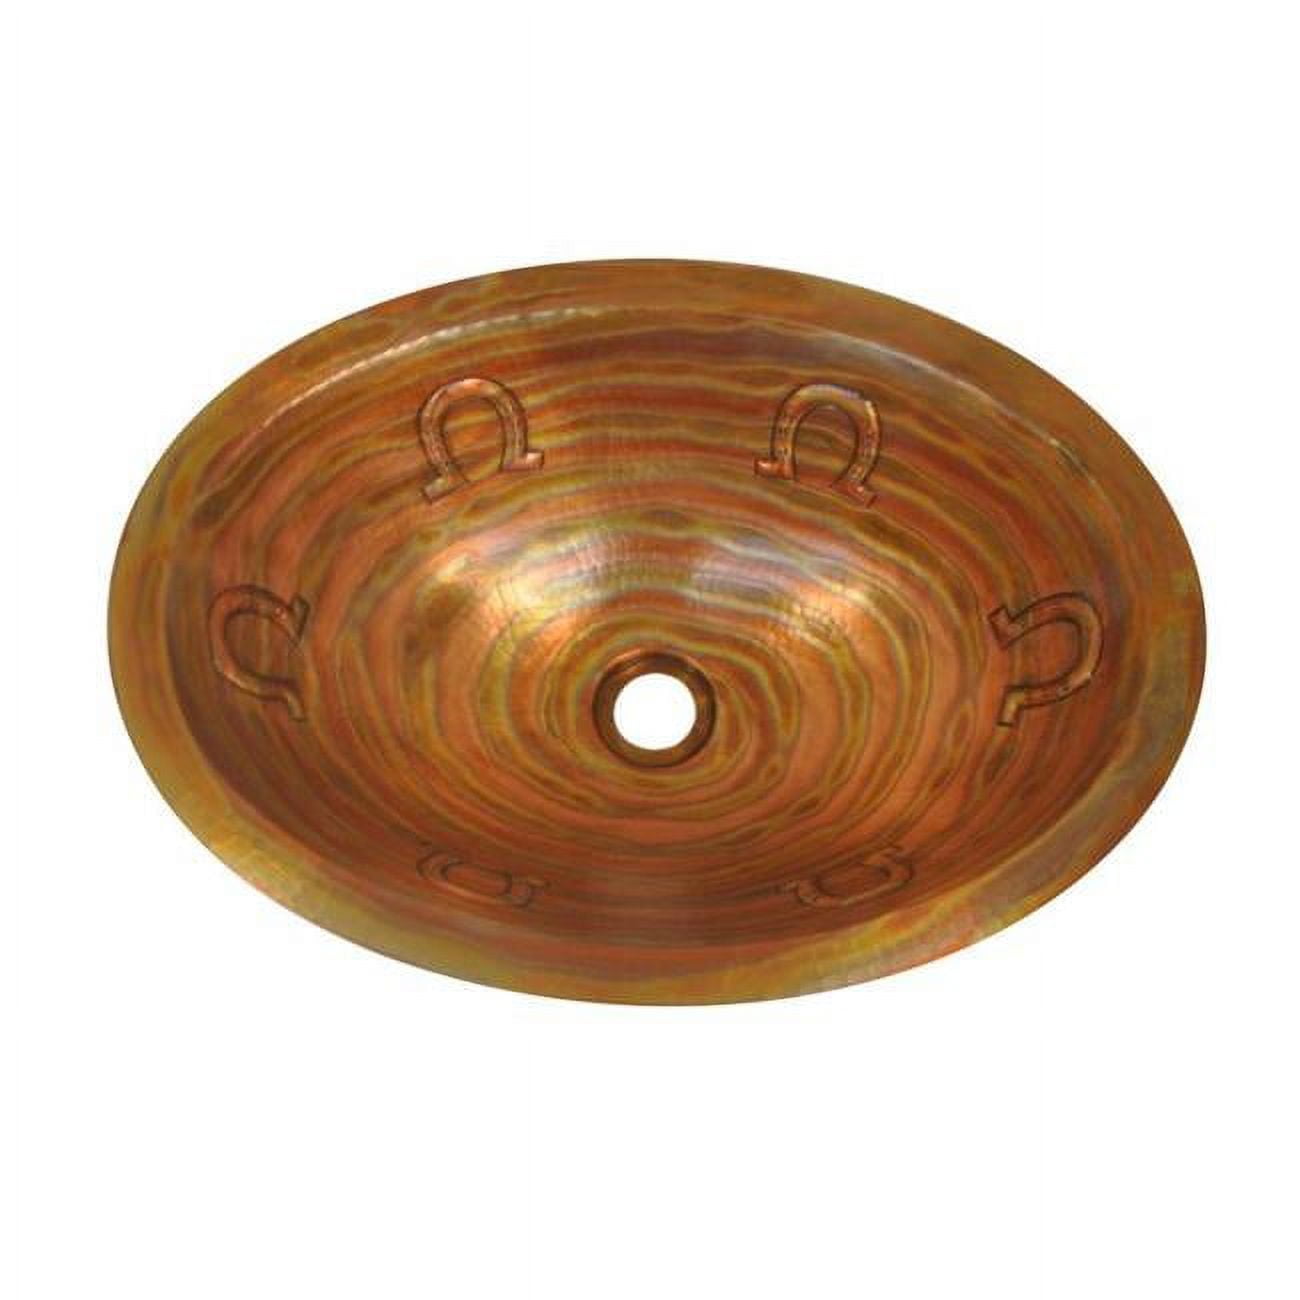 Cos-hs-19-fl-db Copper Oval Bath Sink, Dark Brown - Horseshoe Design - 6 X 14 X 19 In.